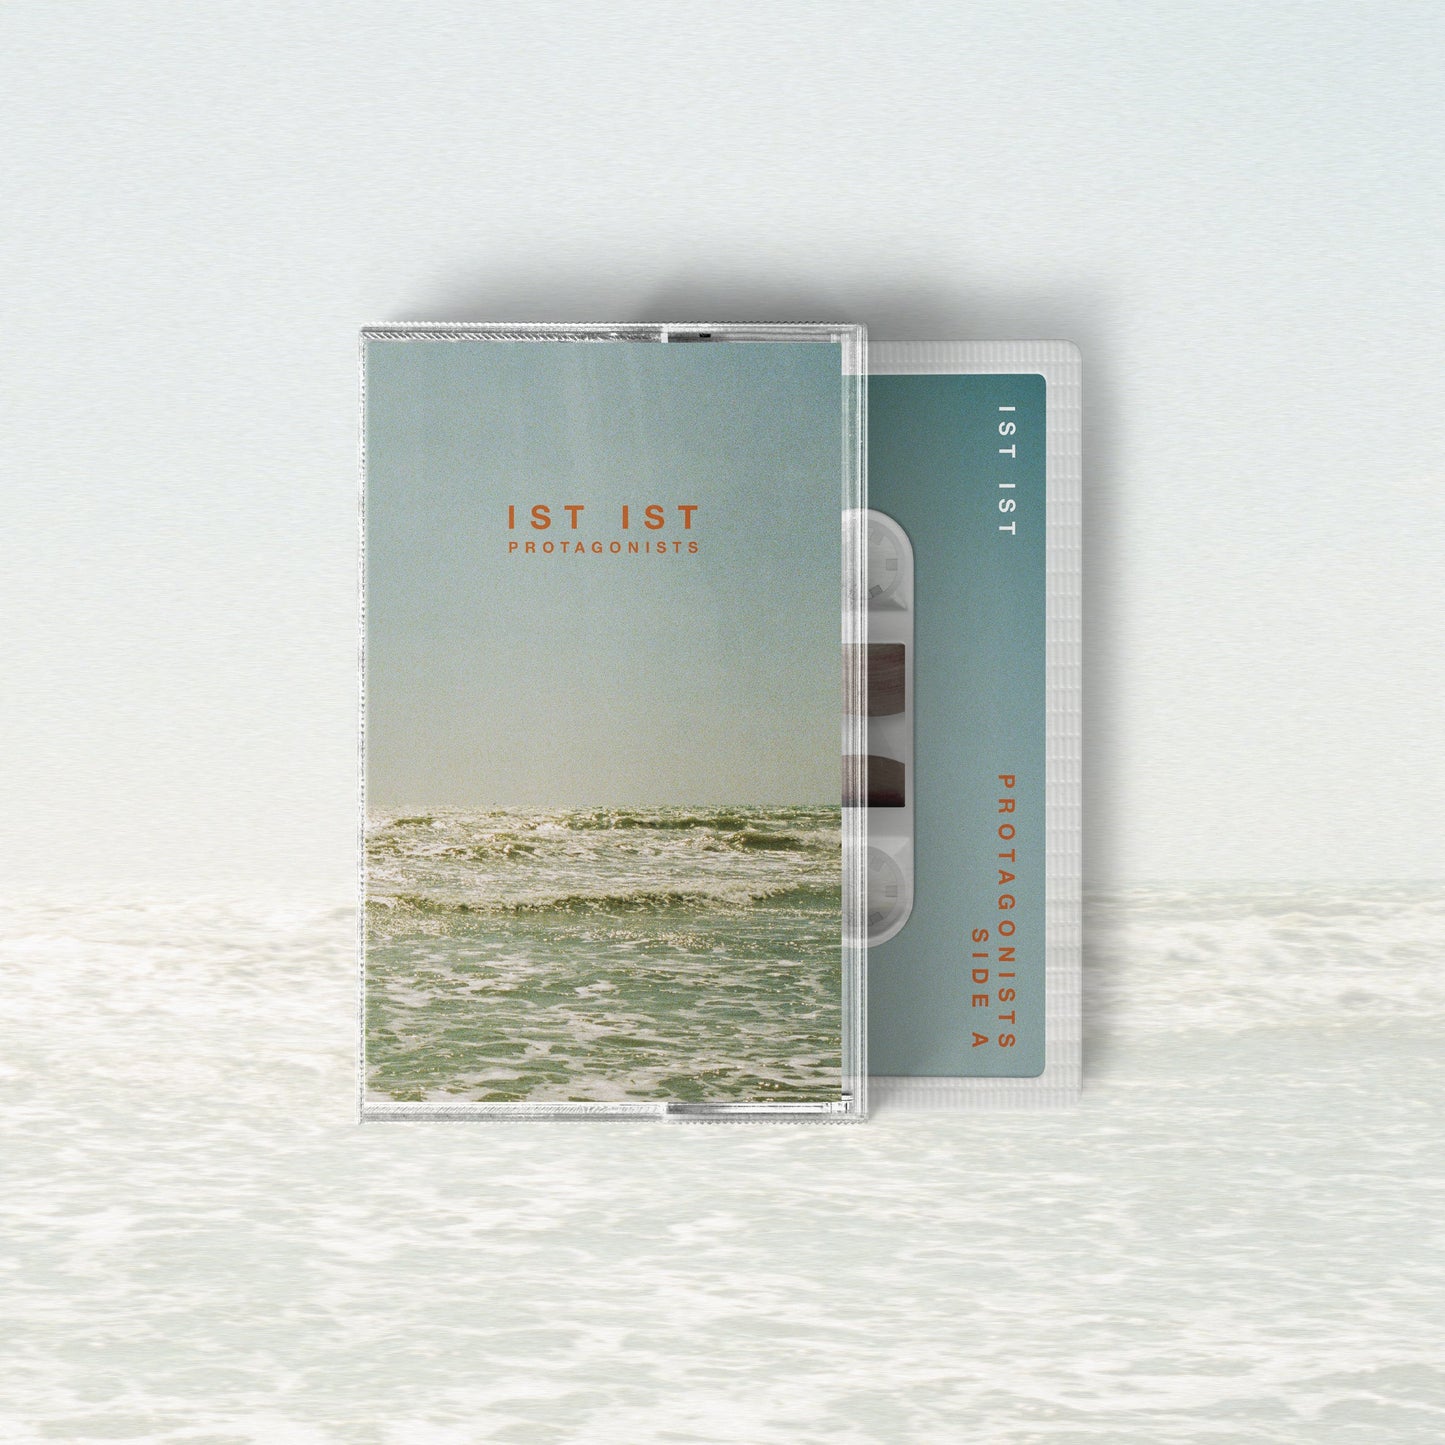 IST IST 'Protagonists’ LP - Cassette